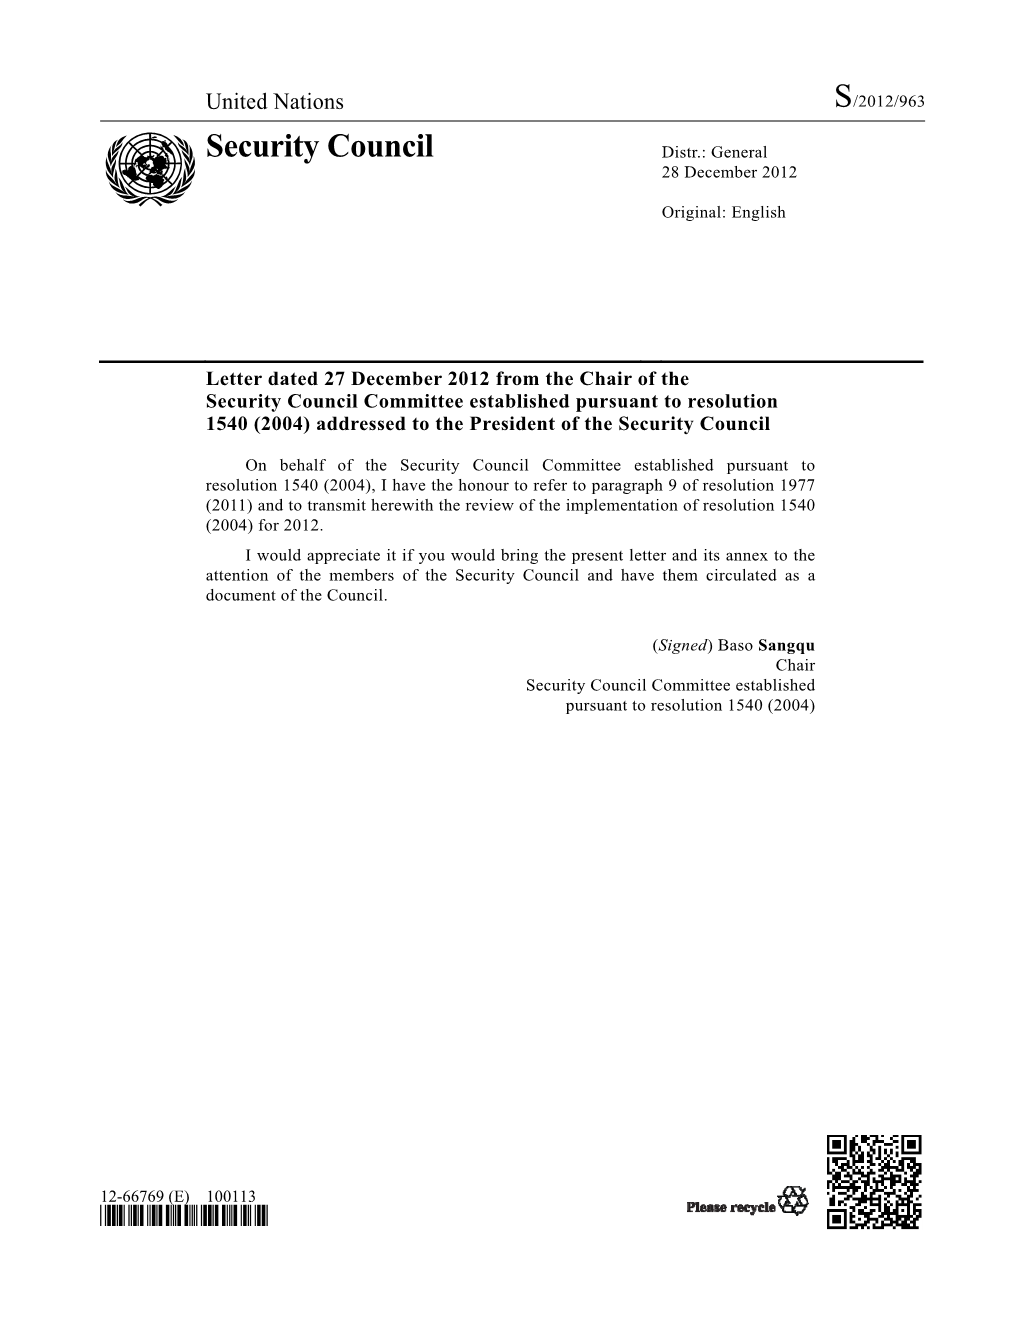 Security Council Distr.: General 28 December 2012